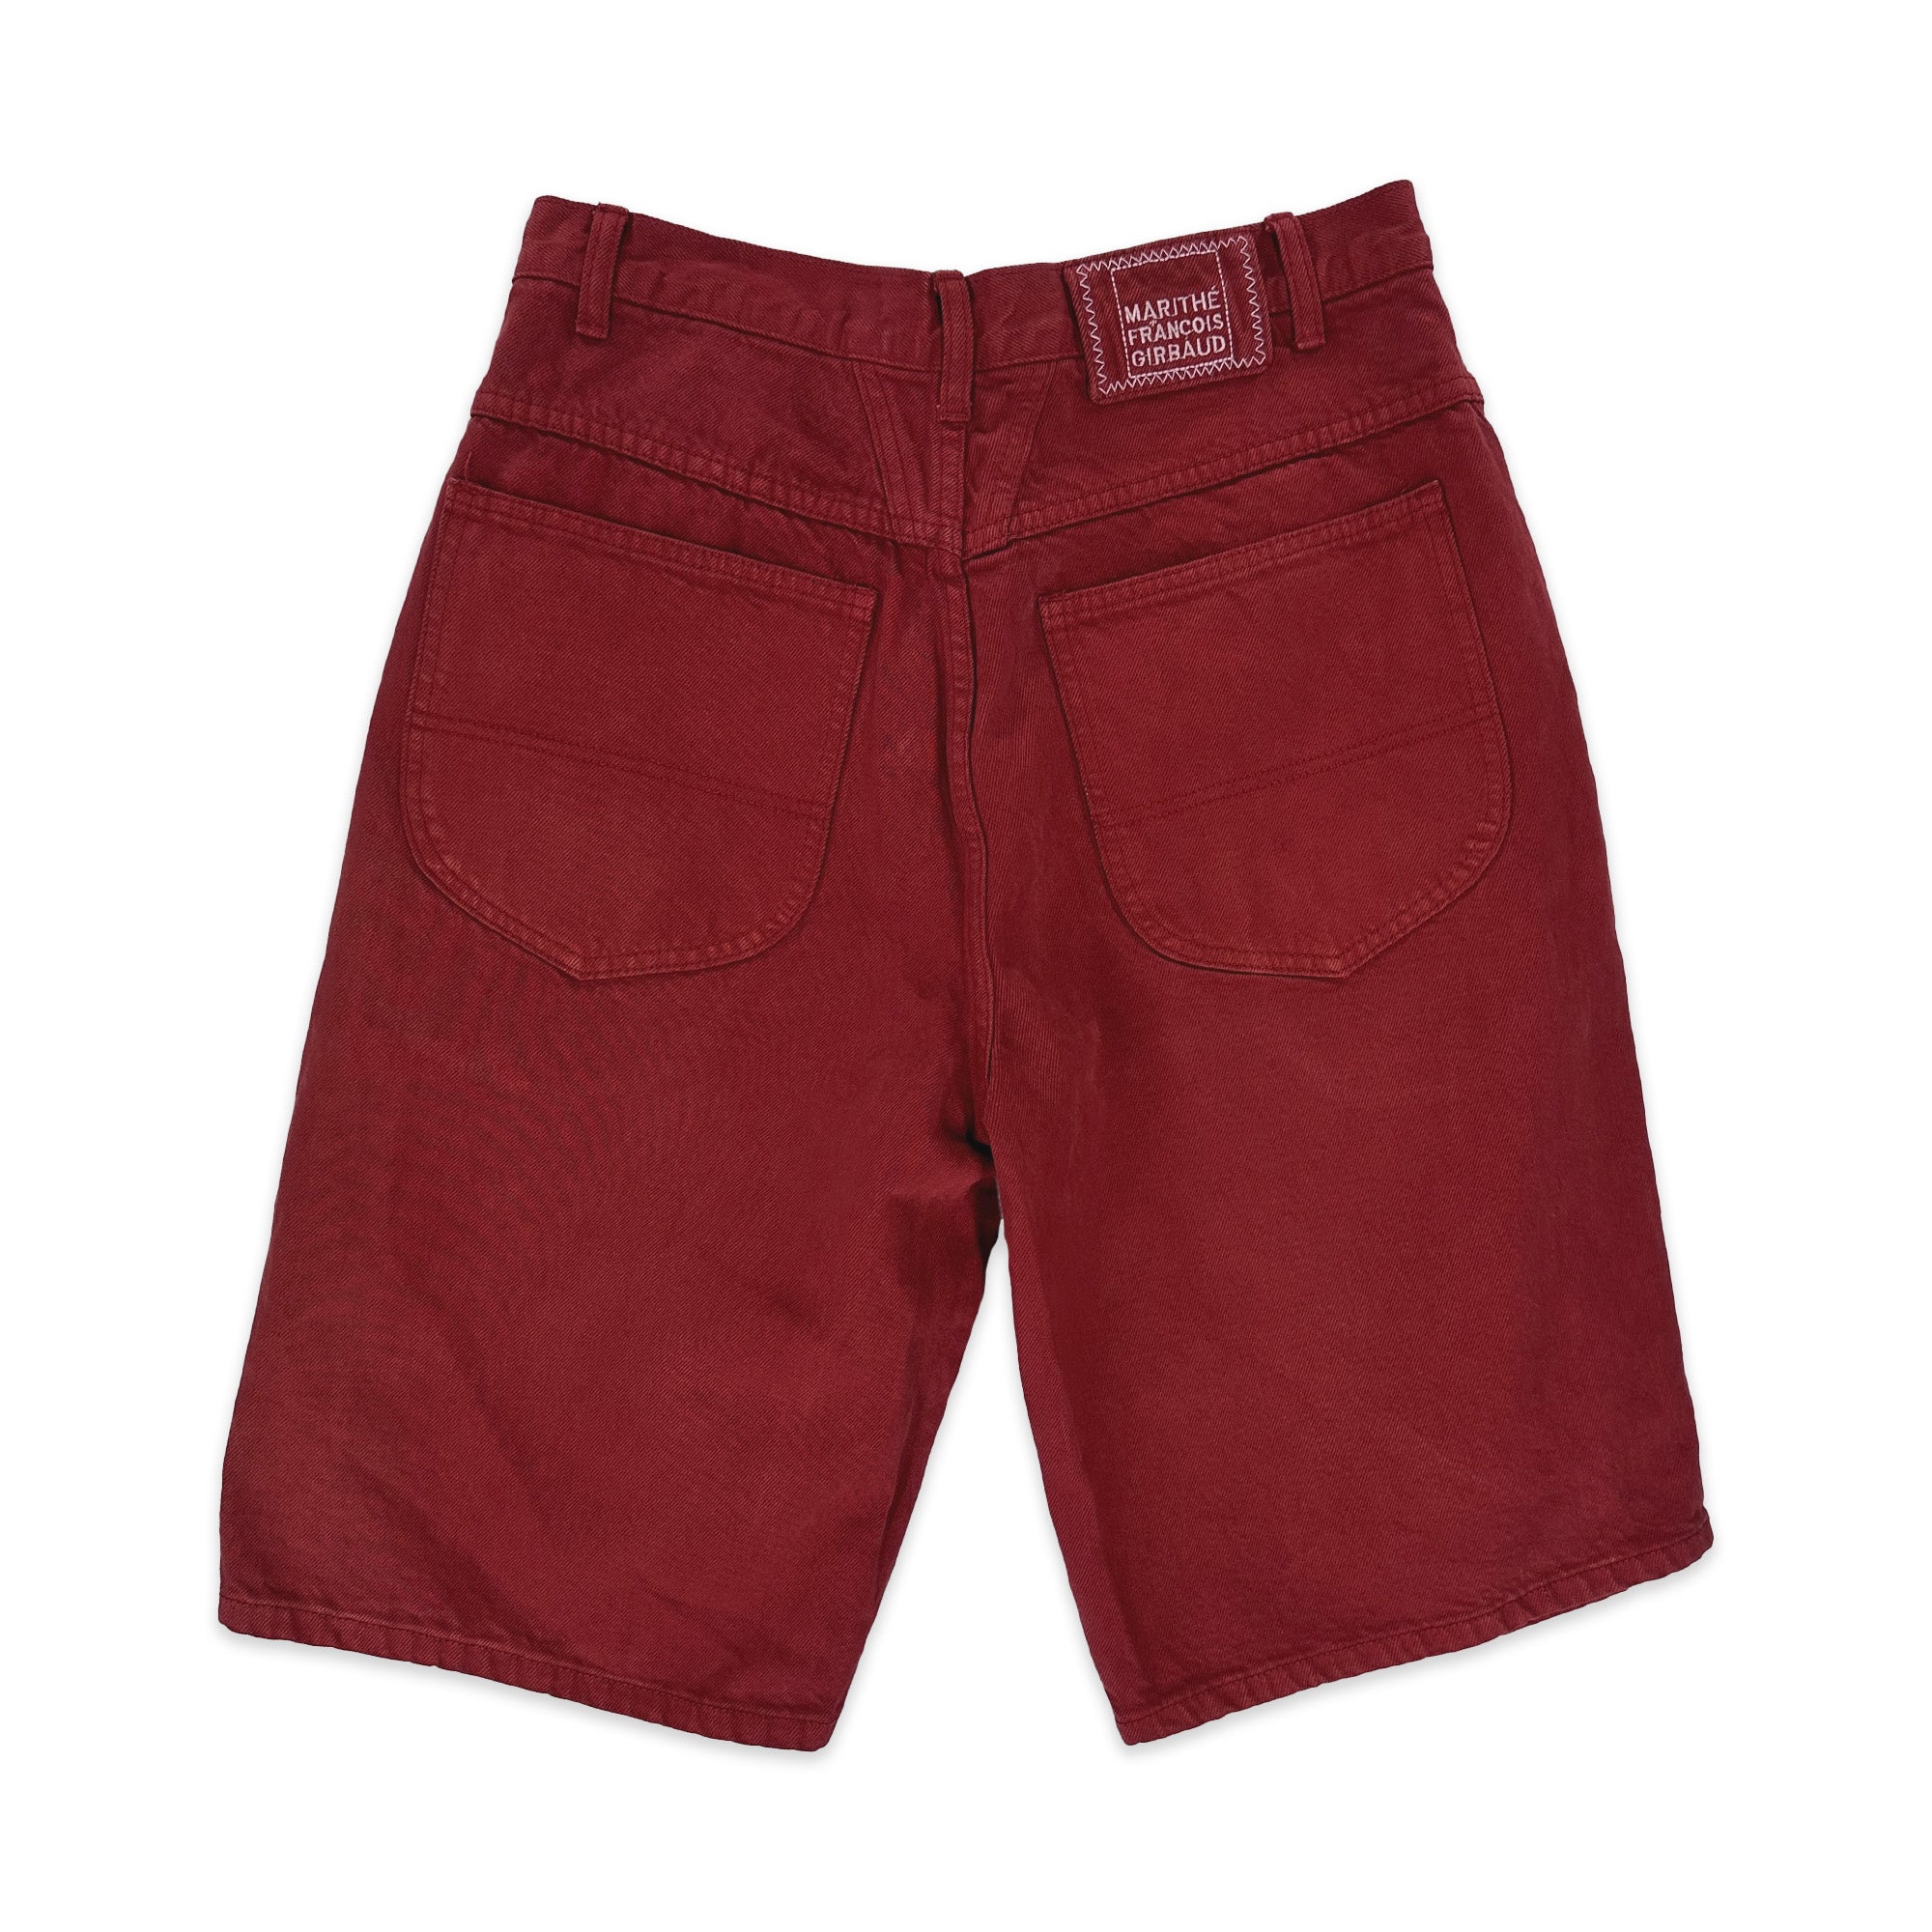 Vintage Girbaud Shorts - NOS - 31 Great Lakes Reclaimed Denim